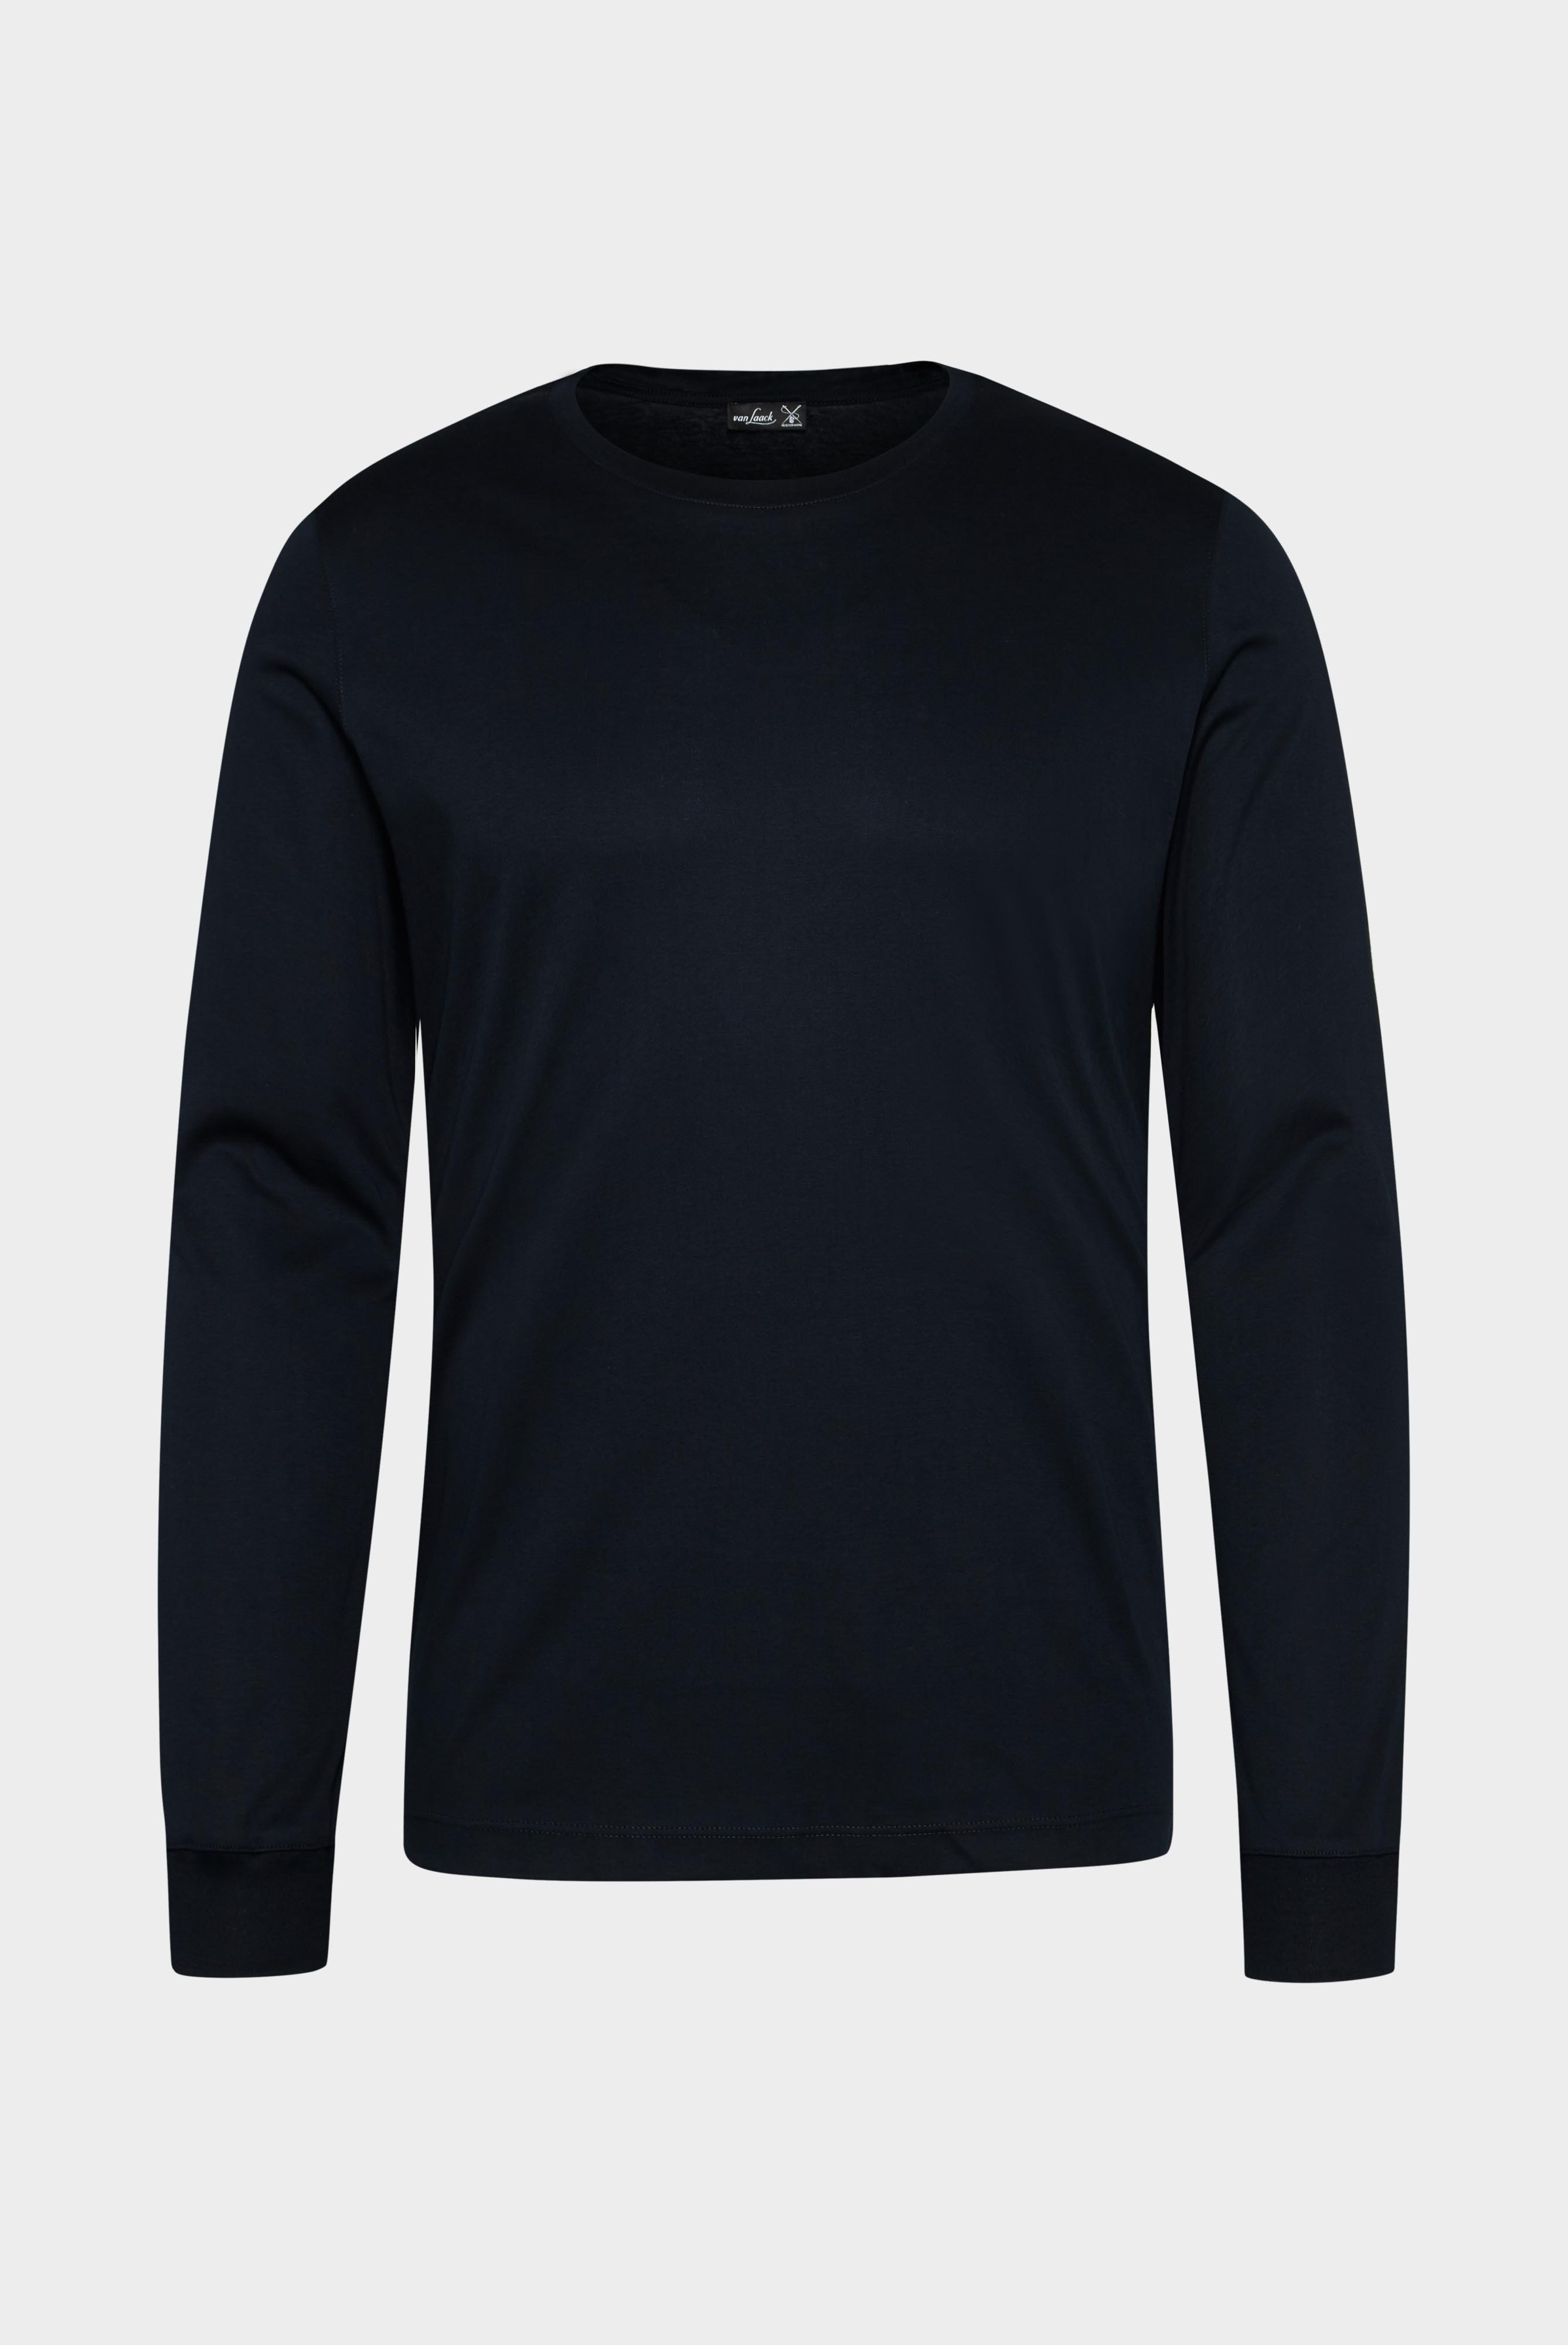 T-Shirts+Longsleeve Swiss Cotton Jersey Crew Neck T-Shirt+20.1718.UX.180031.790.M